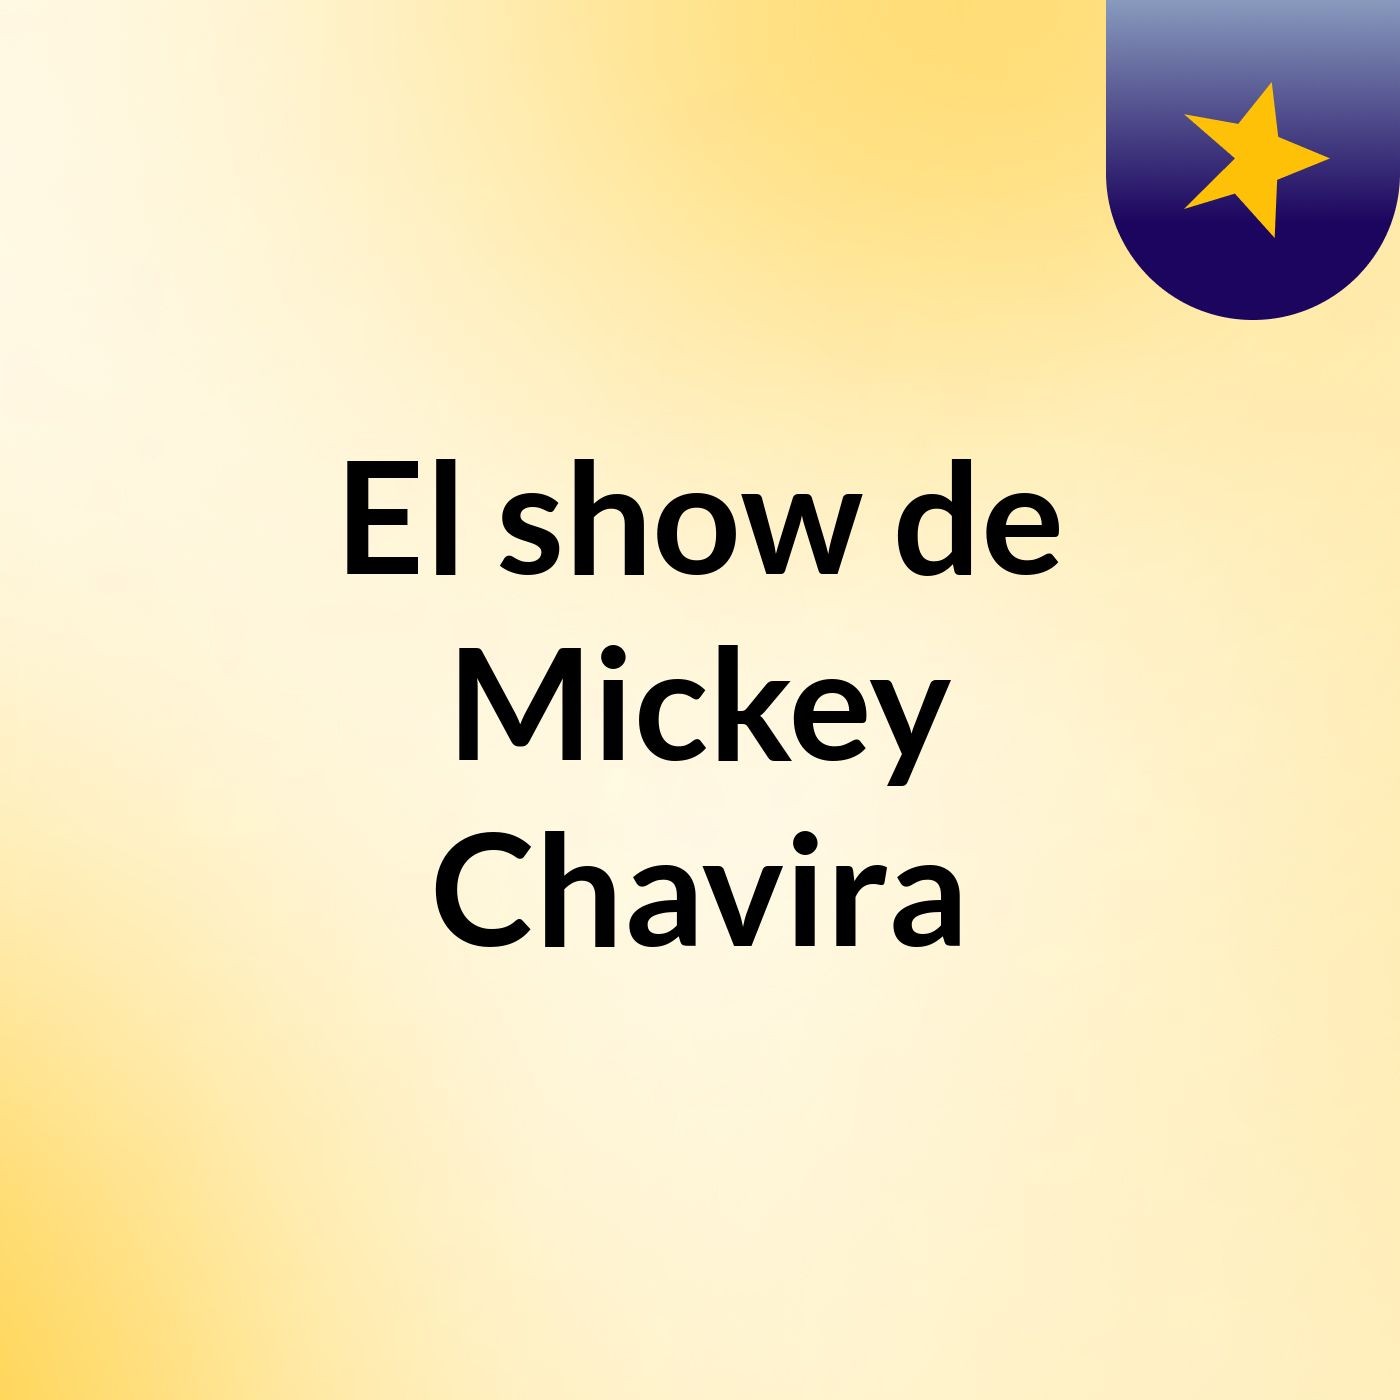 El show de Mickey Chavira